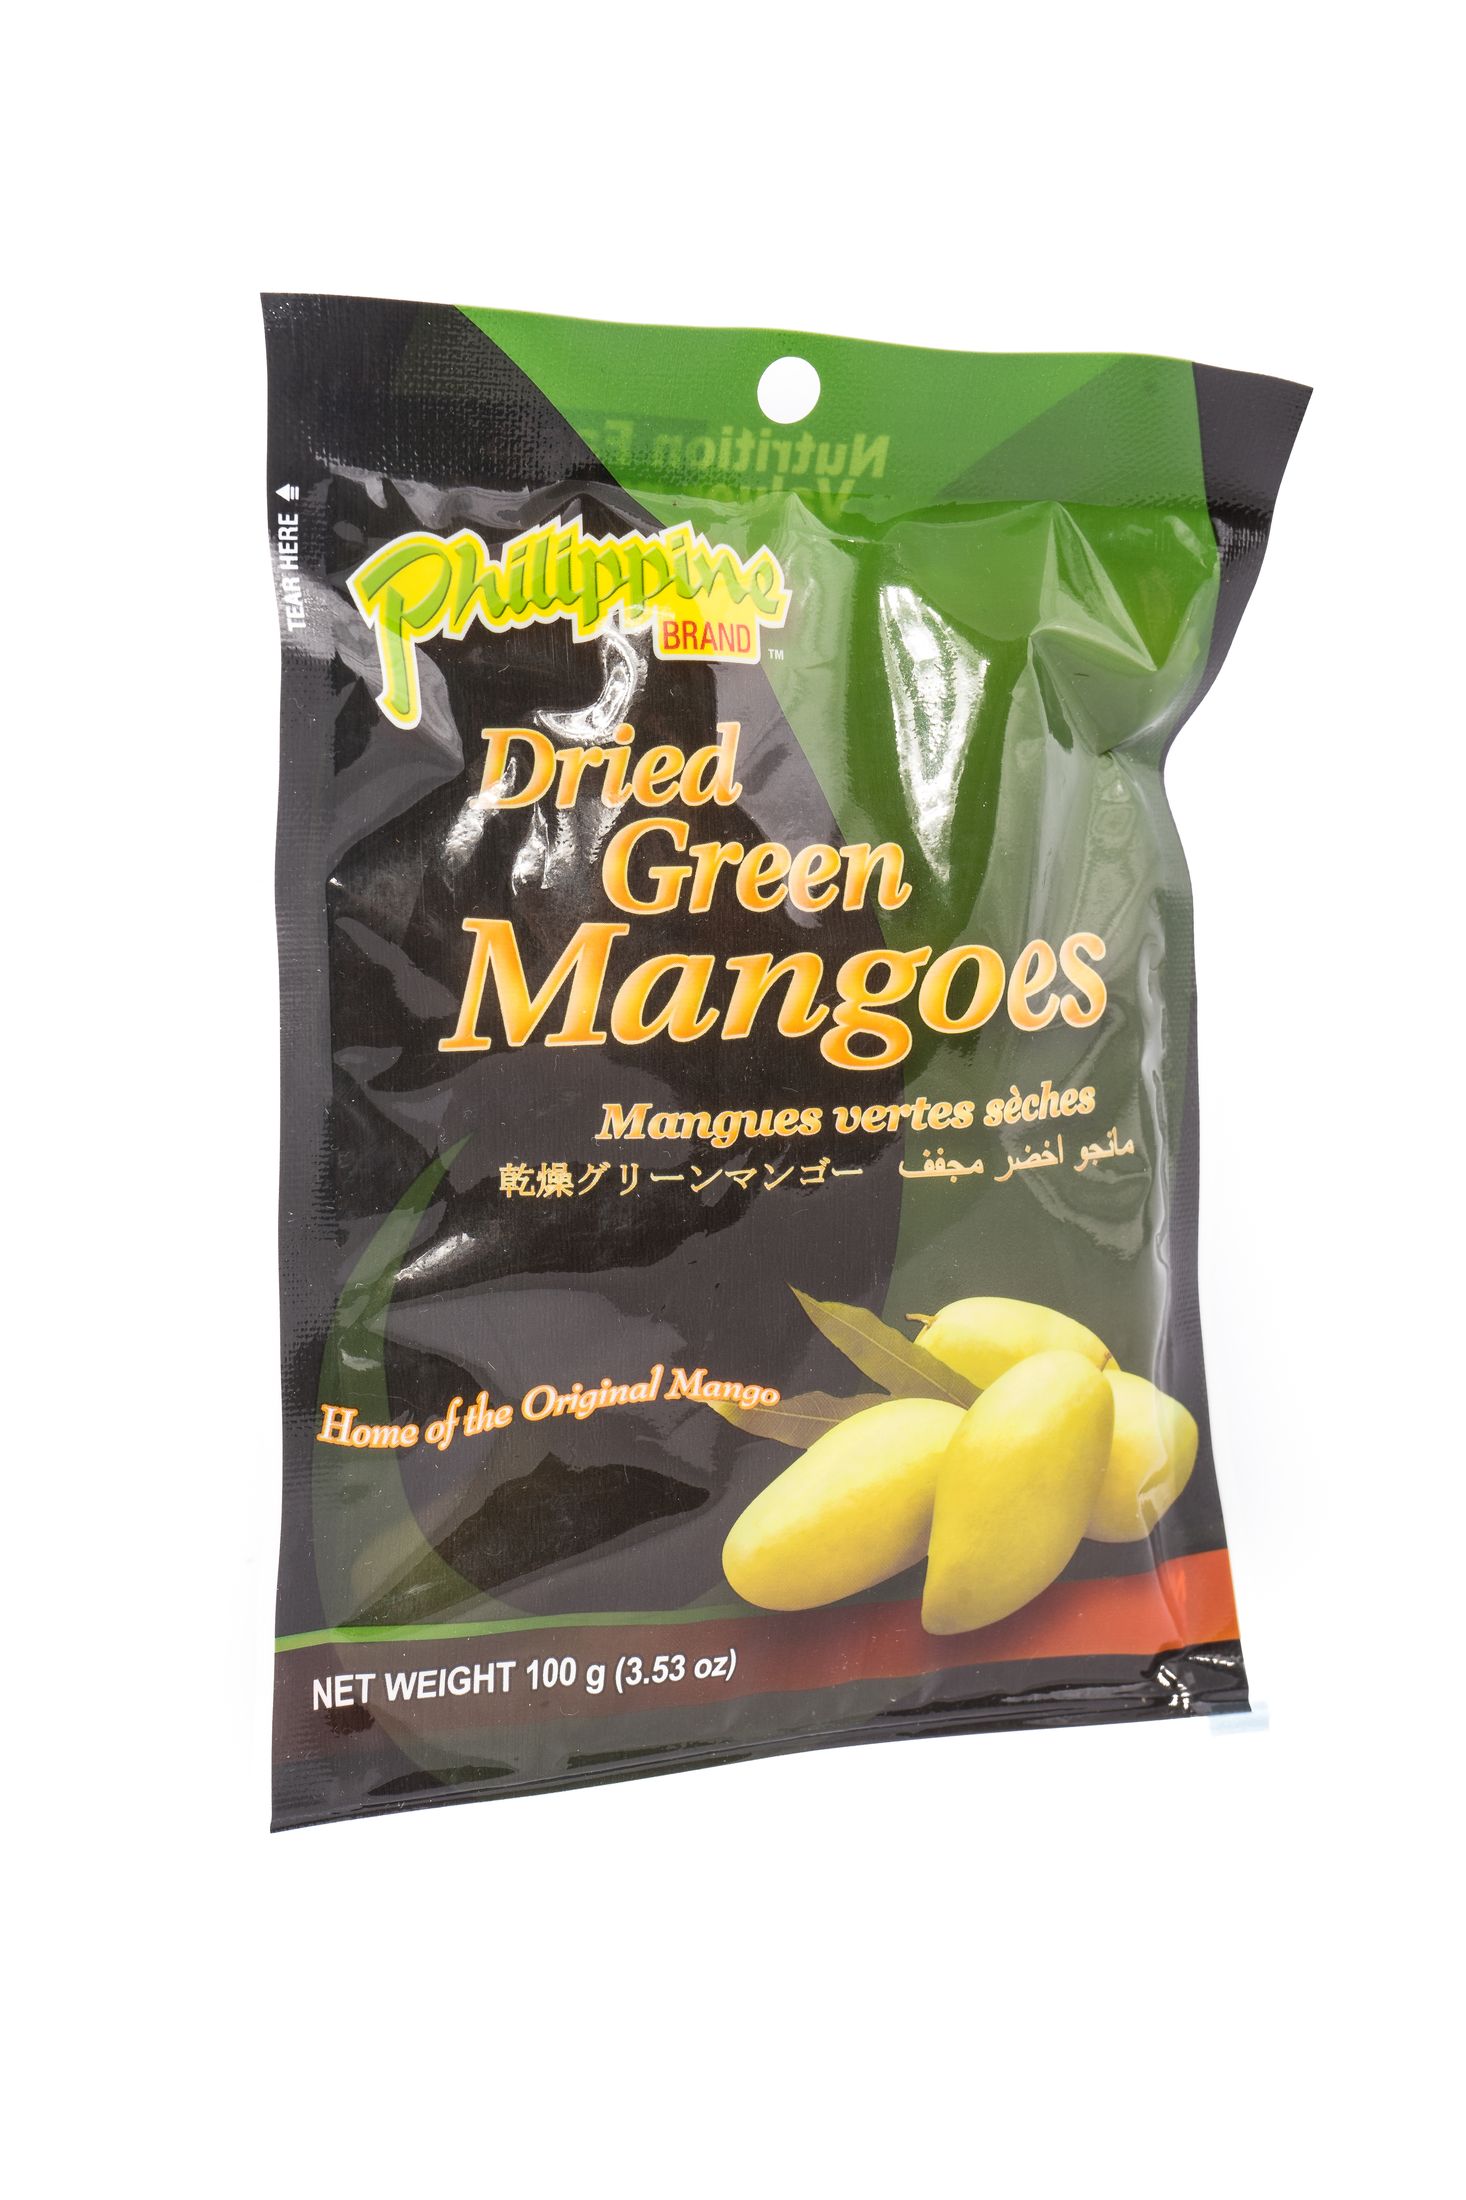 Philippine Brand Dried green mango